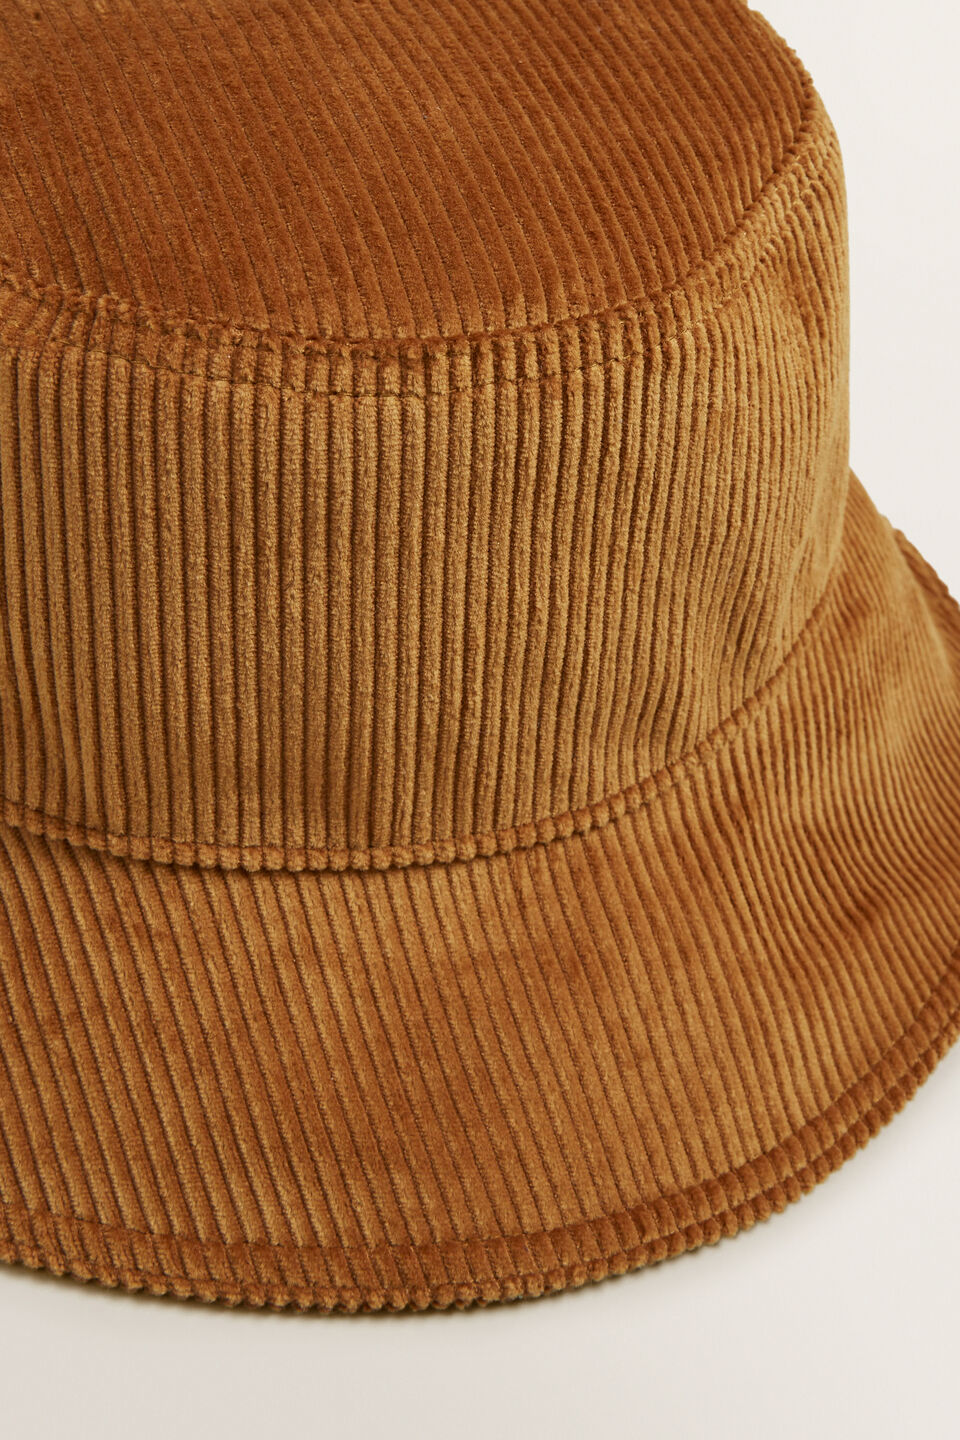 Cord Bucket Hat  